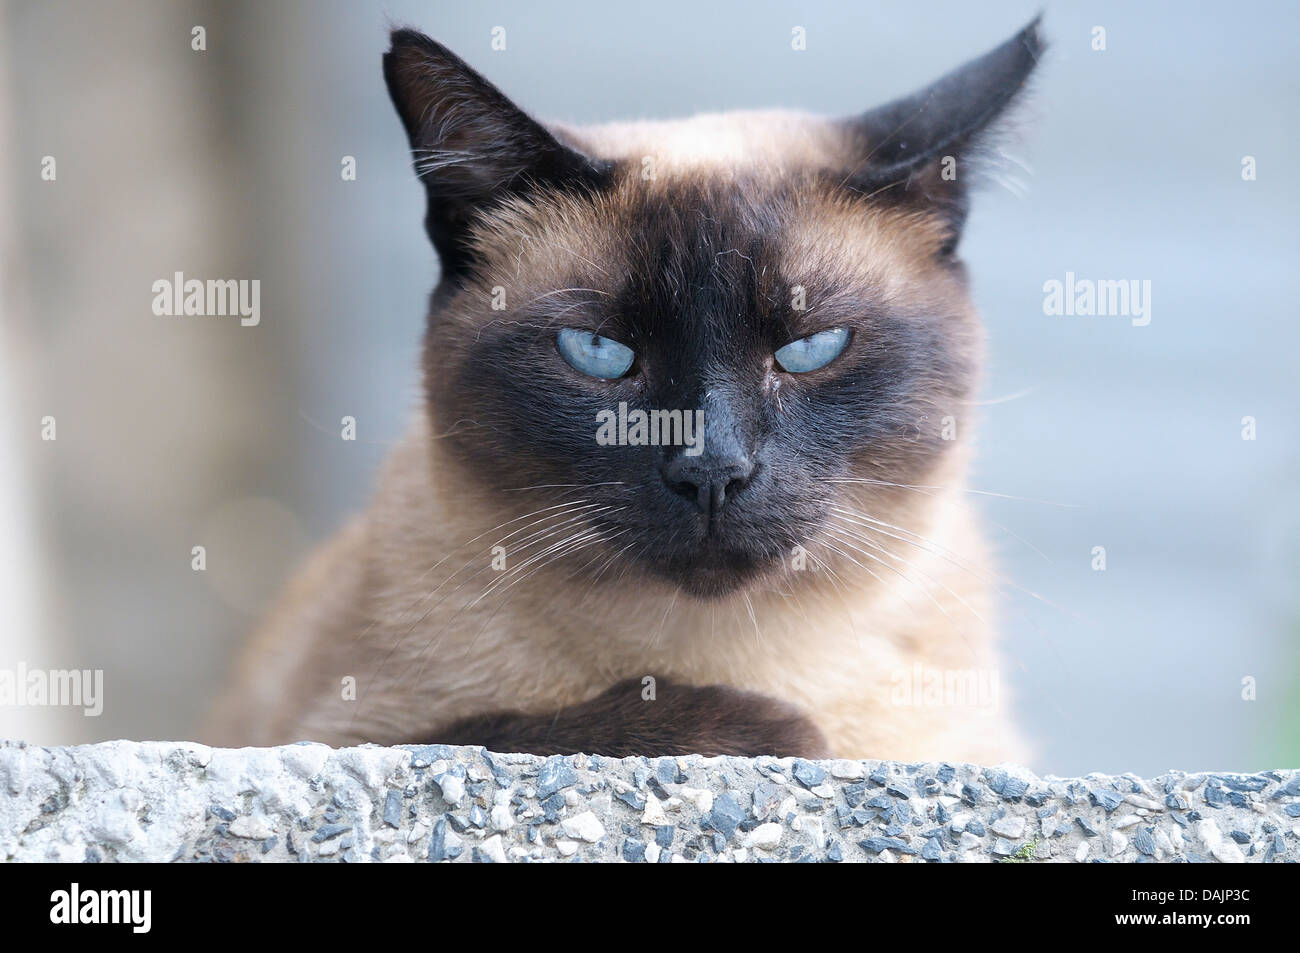  Mug  shot  of a cat  Stock Photo 58190144 Alamy